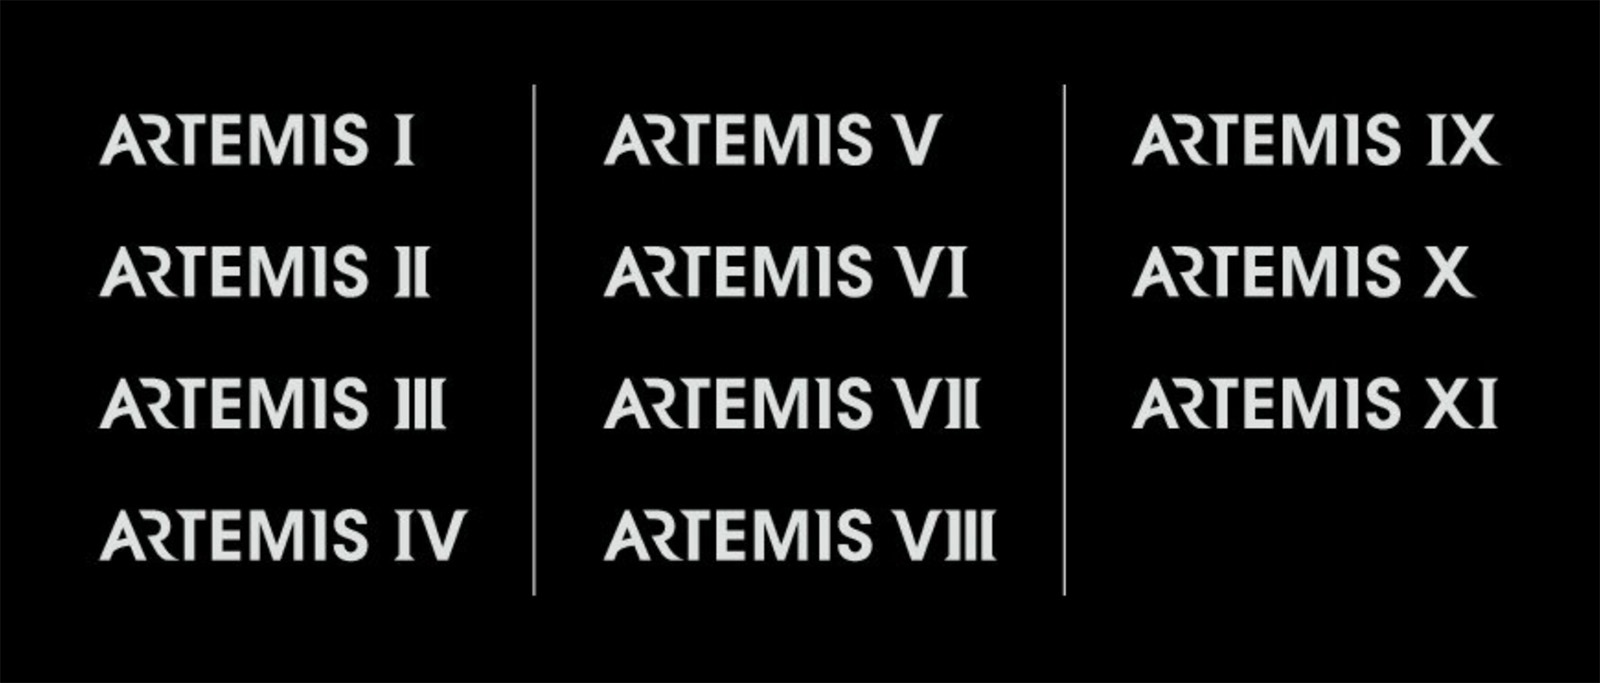 Artemis numbers